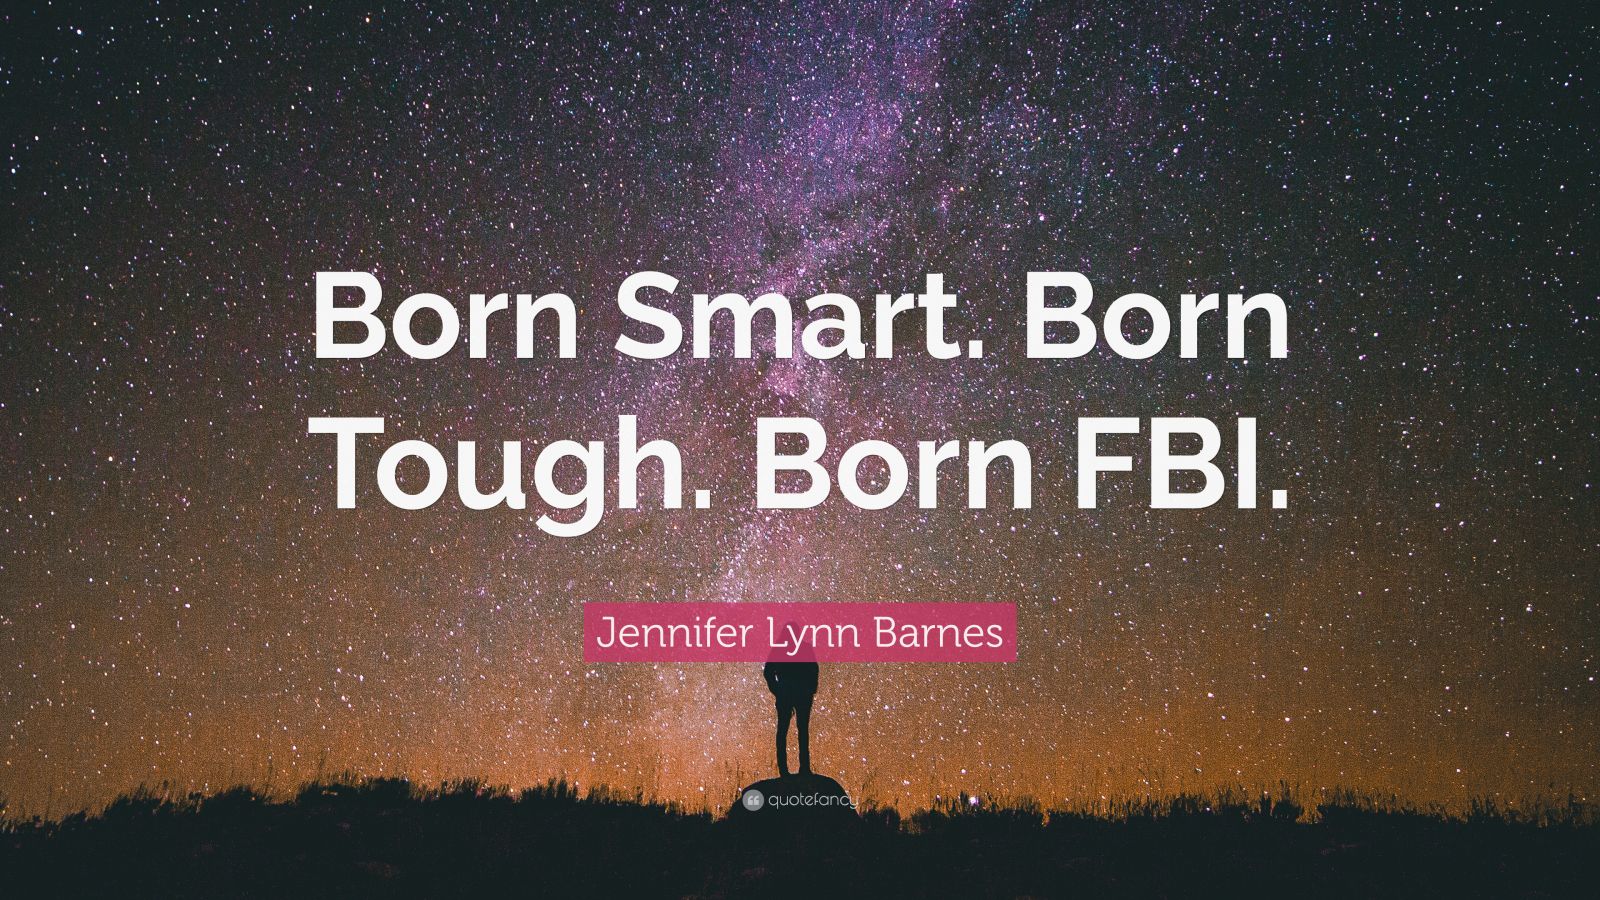 Jennifer Lynn Barnes Quote: “Born Smart. Born Tough. Born FBI.”